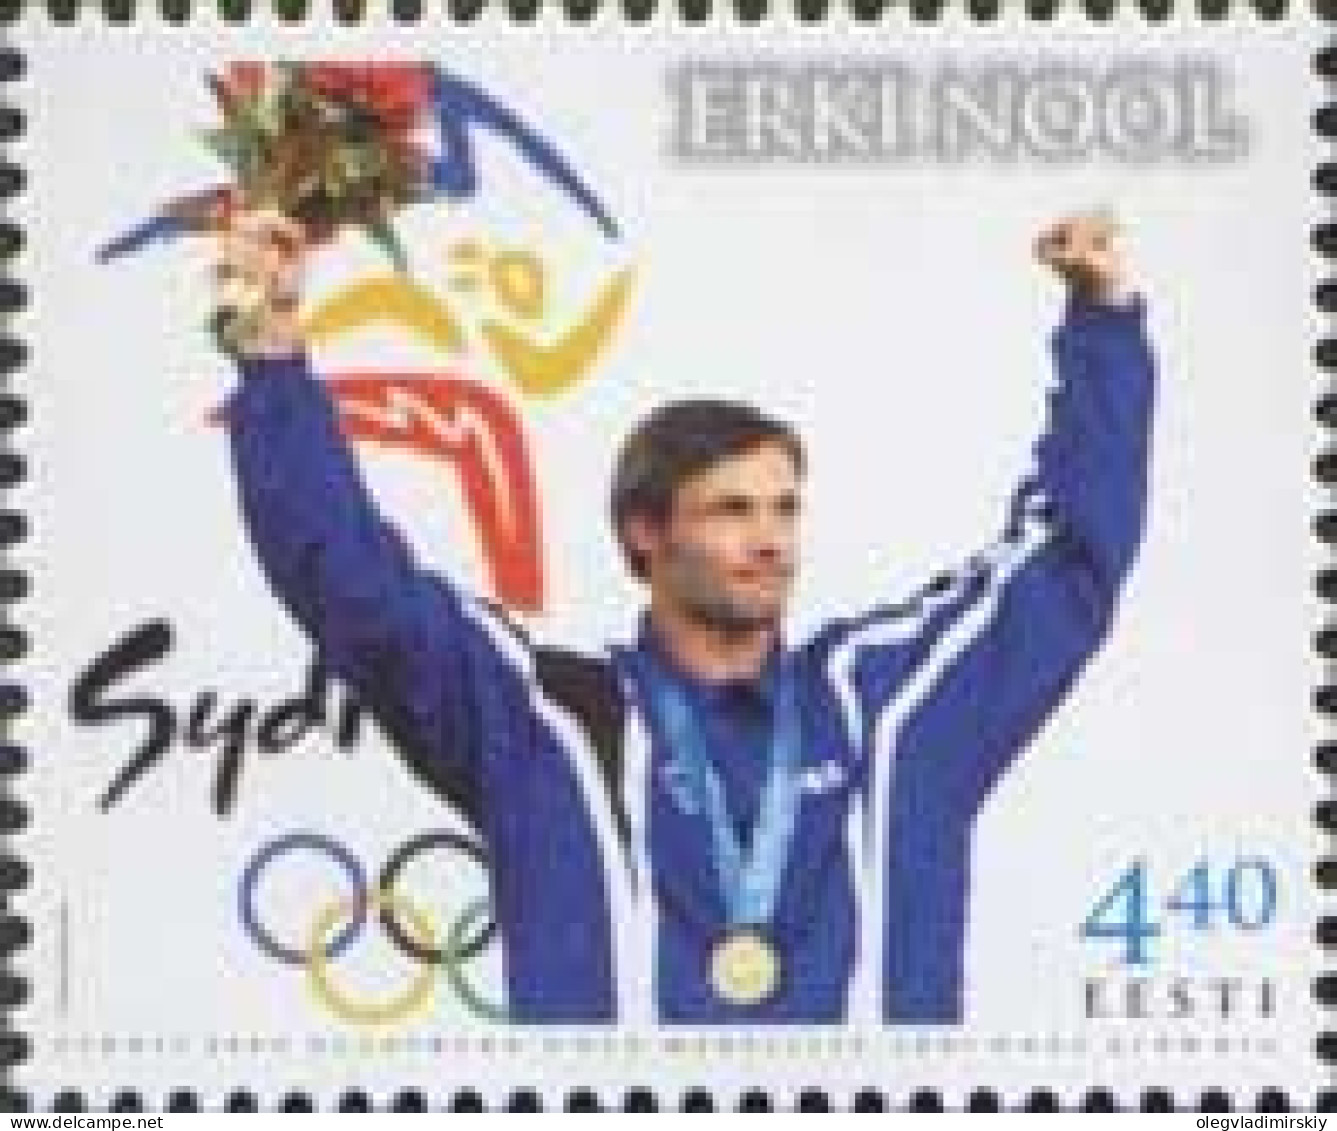 Estonia Estland Estonie 2001 Olympic Champion Erki Nool Sydney Summer Olympics Stamp MNH - Sommer 2000: Sydney - Paralympics